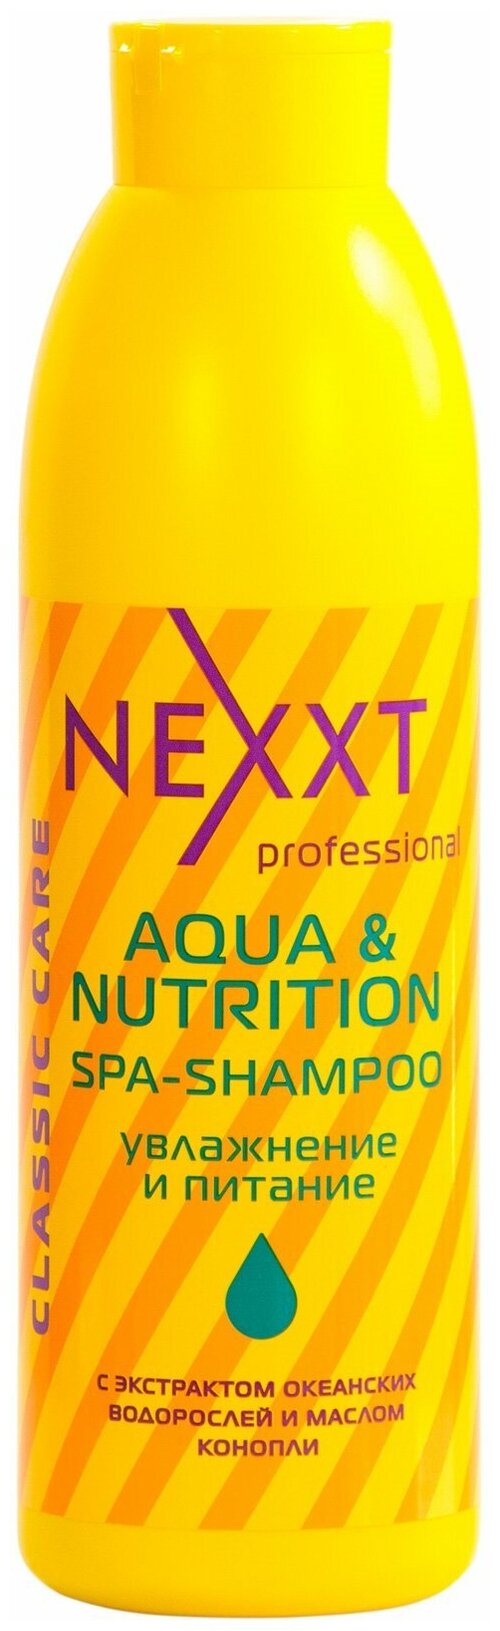 NEXPROF спа-шампунь Professional Classic Care Aqua & Nutrition увлажнение и питание, 1000 мл